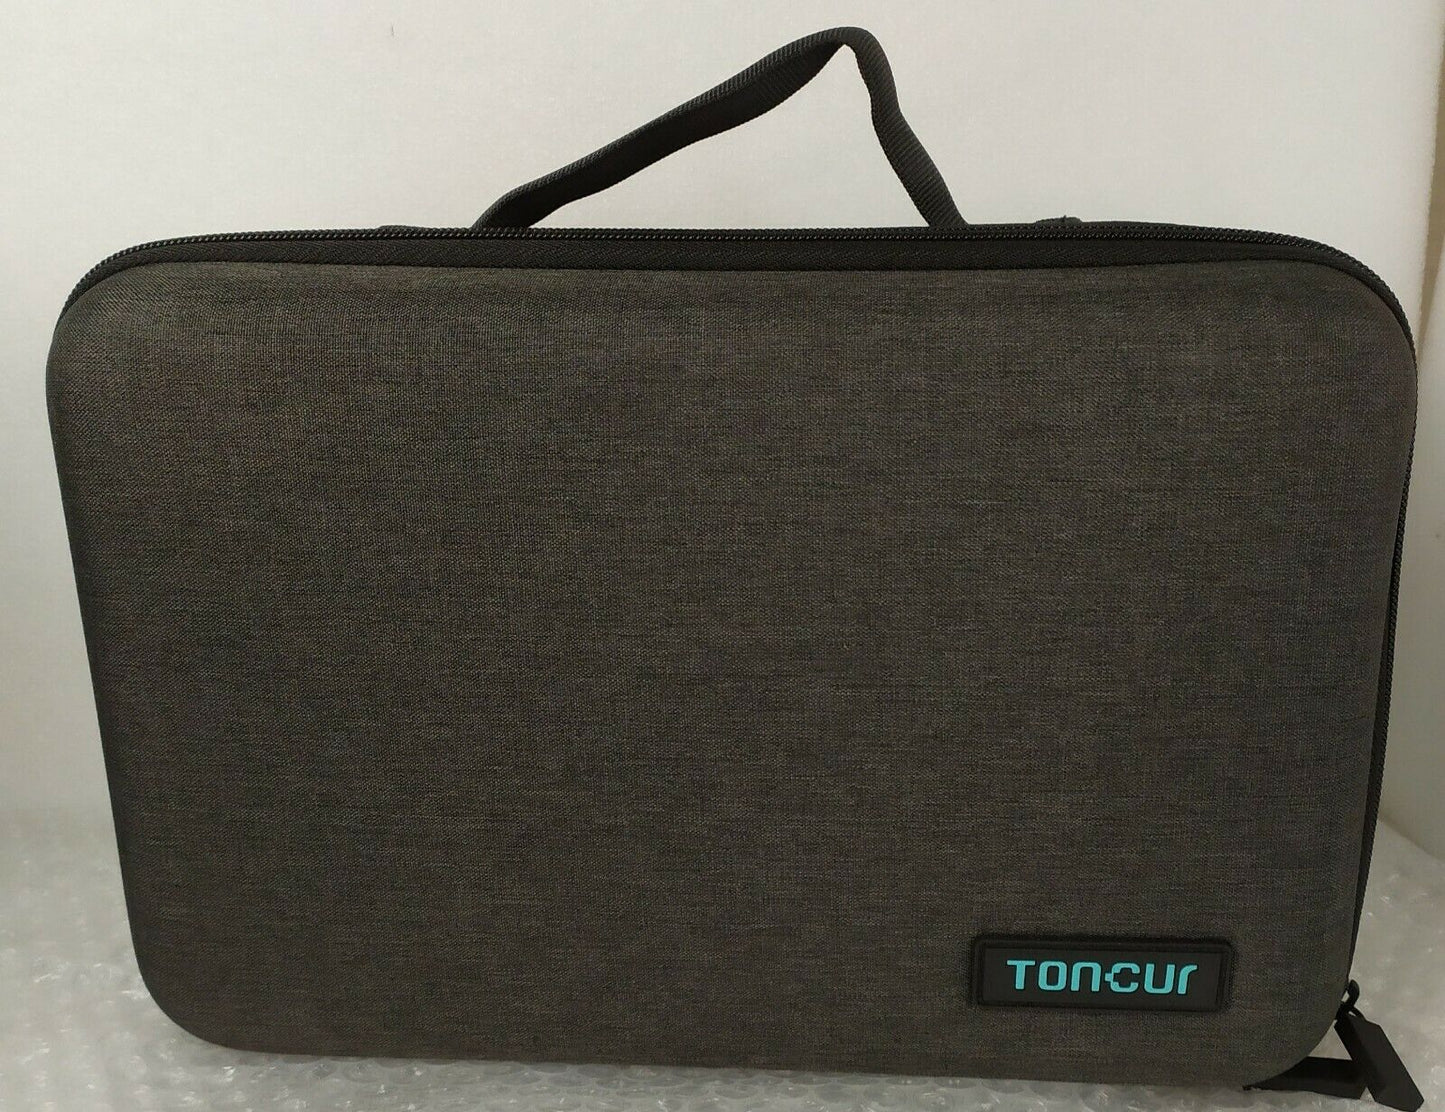 Toncur Hero 1 Model 30 speed Wireless Rechargeable Sports Massager 30W 3200rpm Fitness Gun Massager 6 heads Case